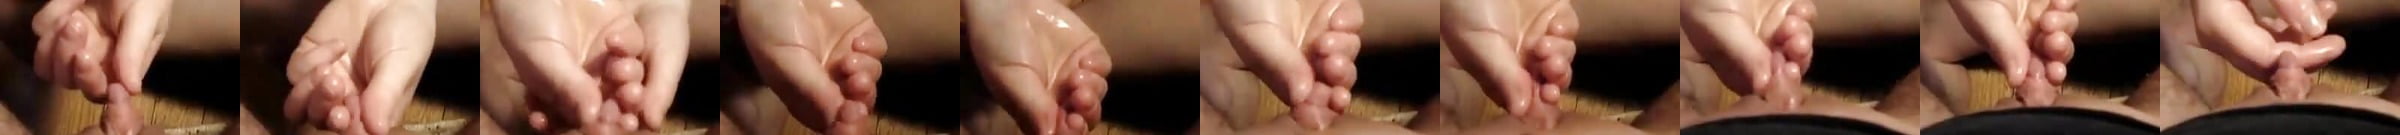 Real Orgasm Of Big Clitoris Free Real Orgasms Porn Video